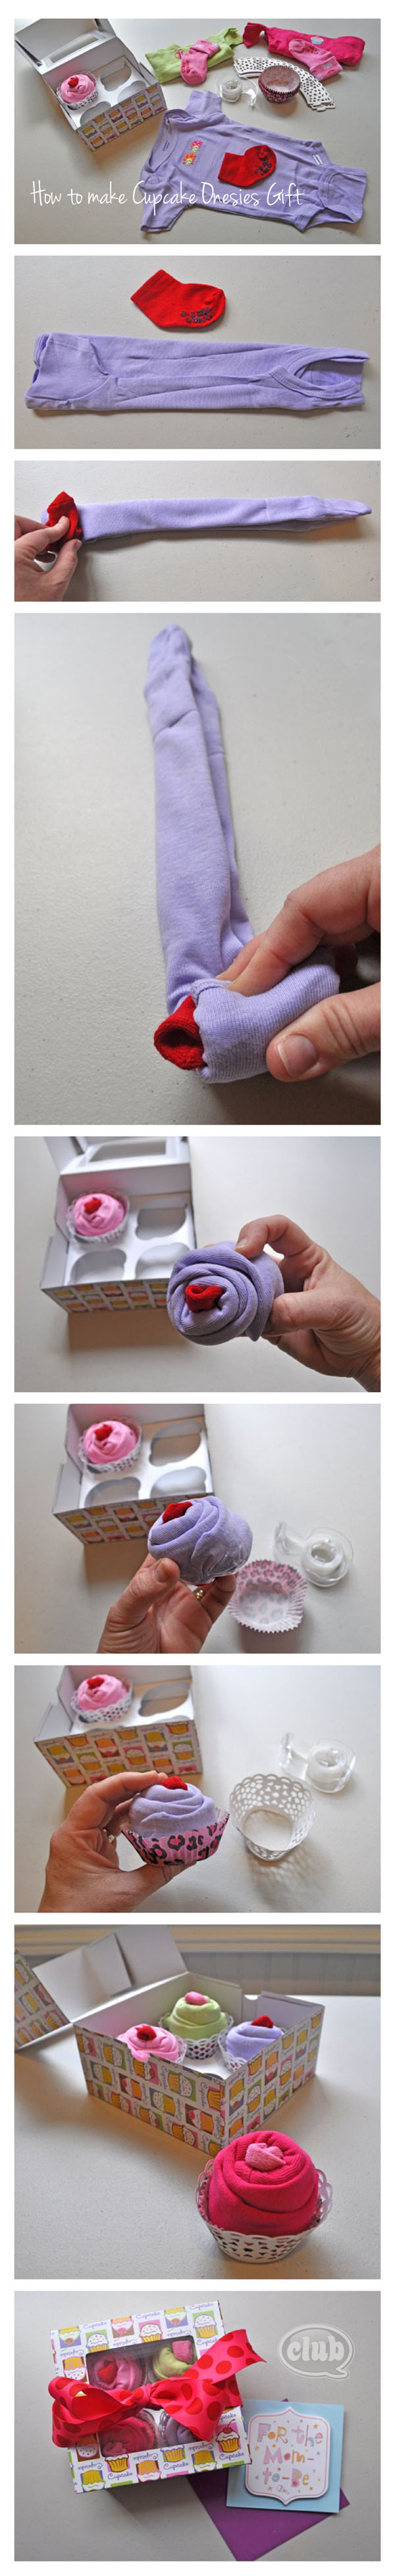 cupcake-baby-gift-steps